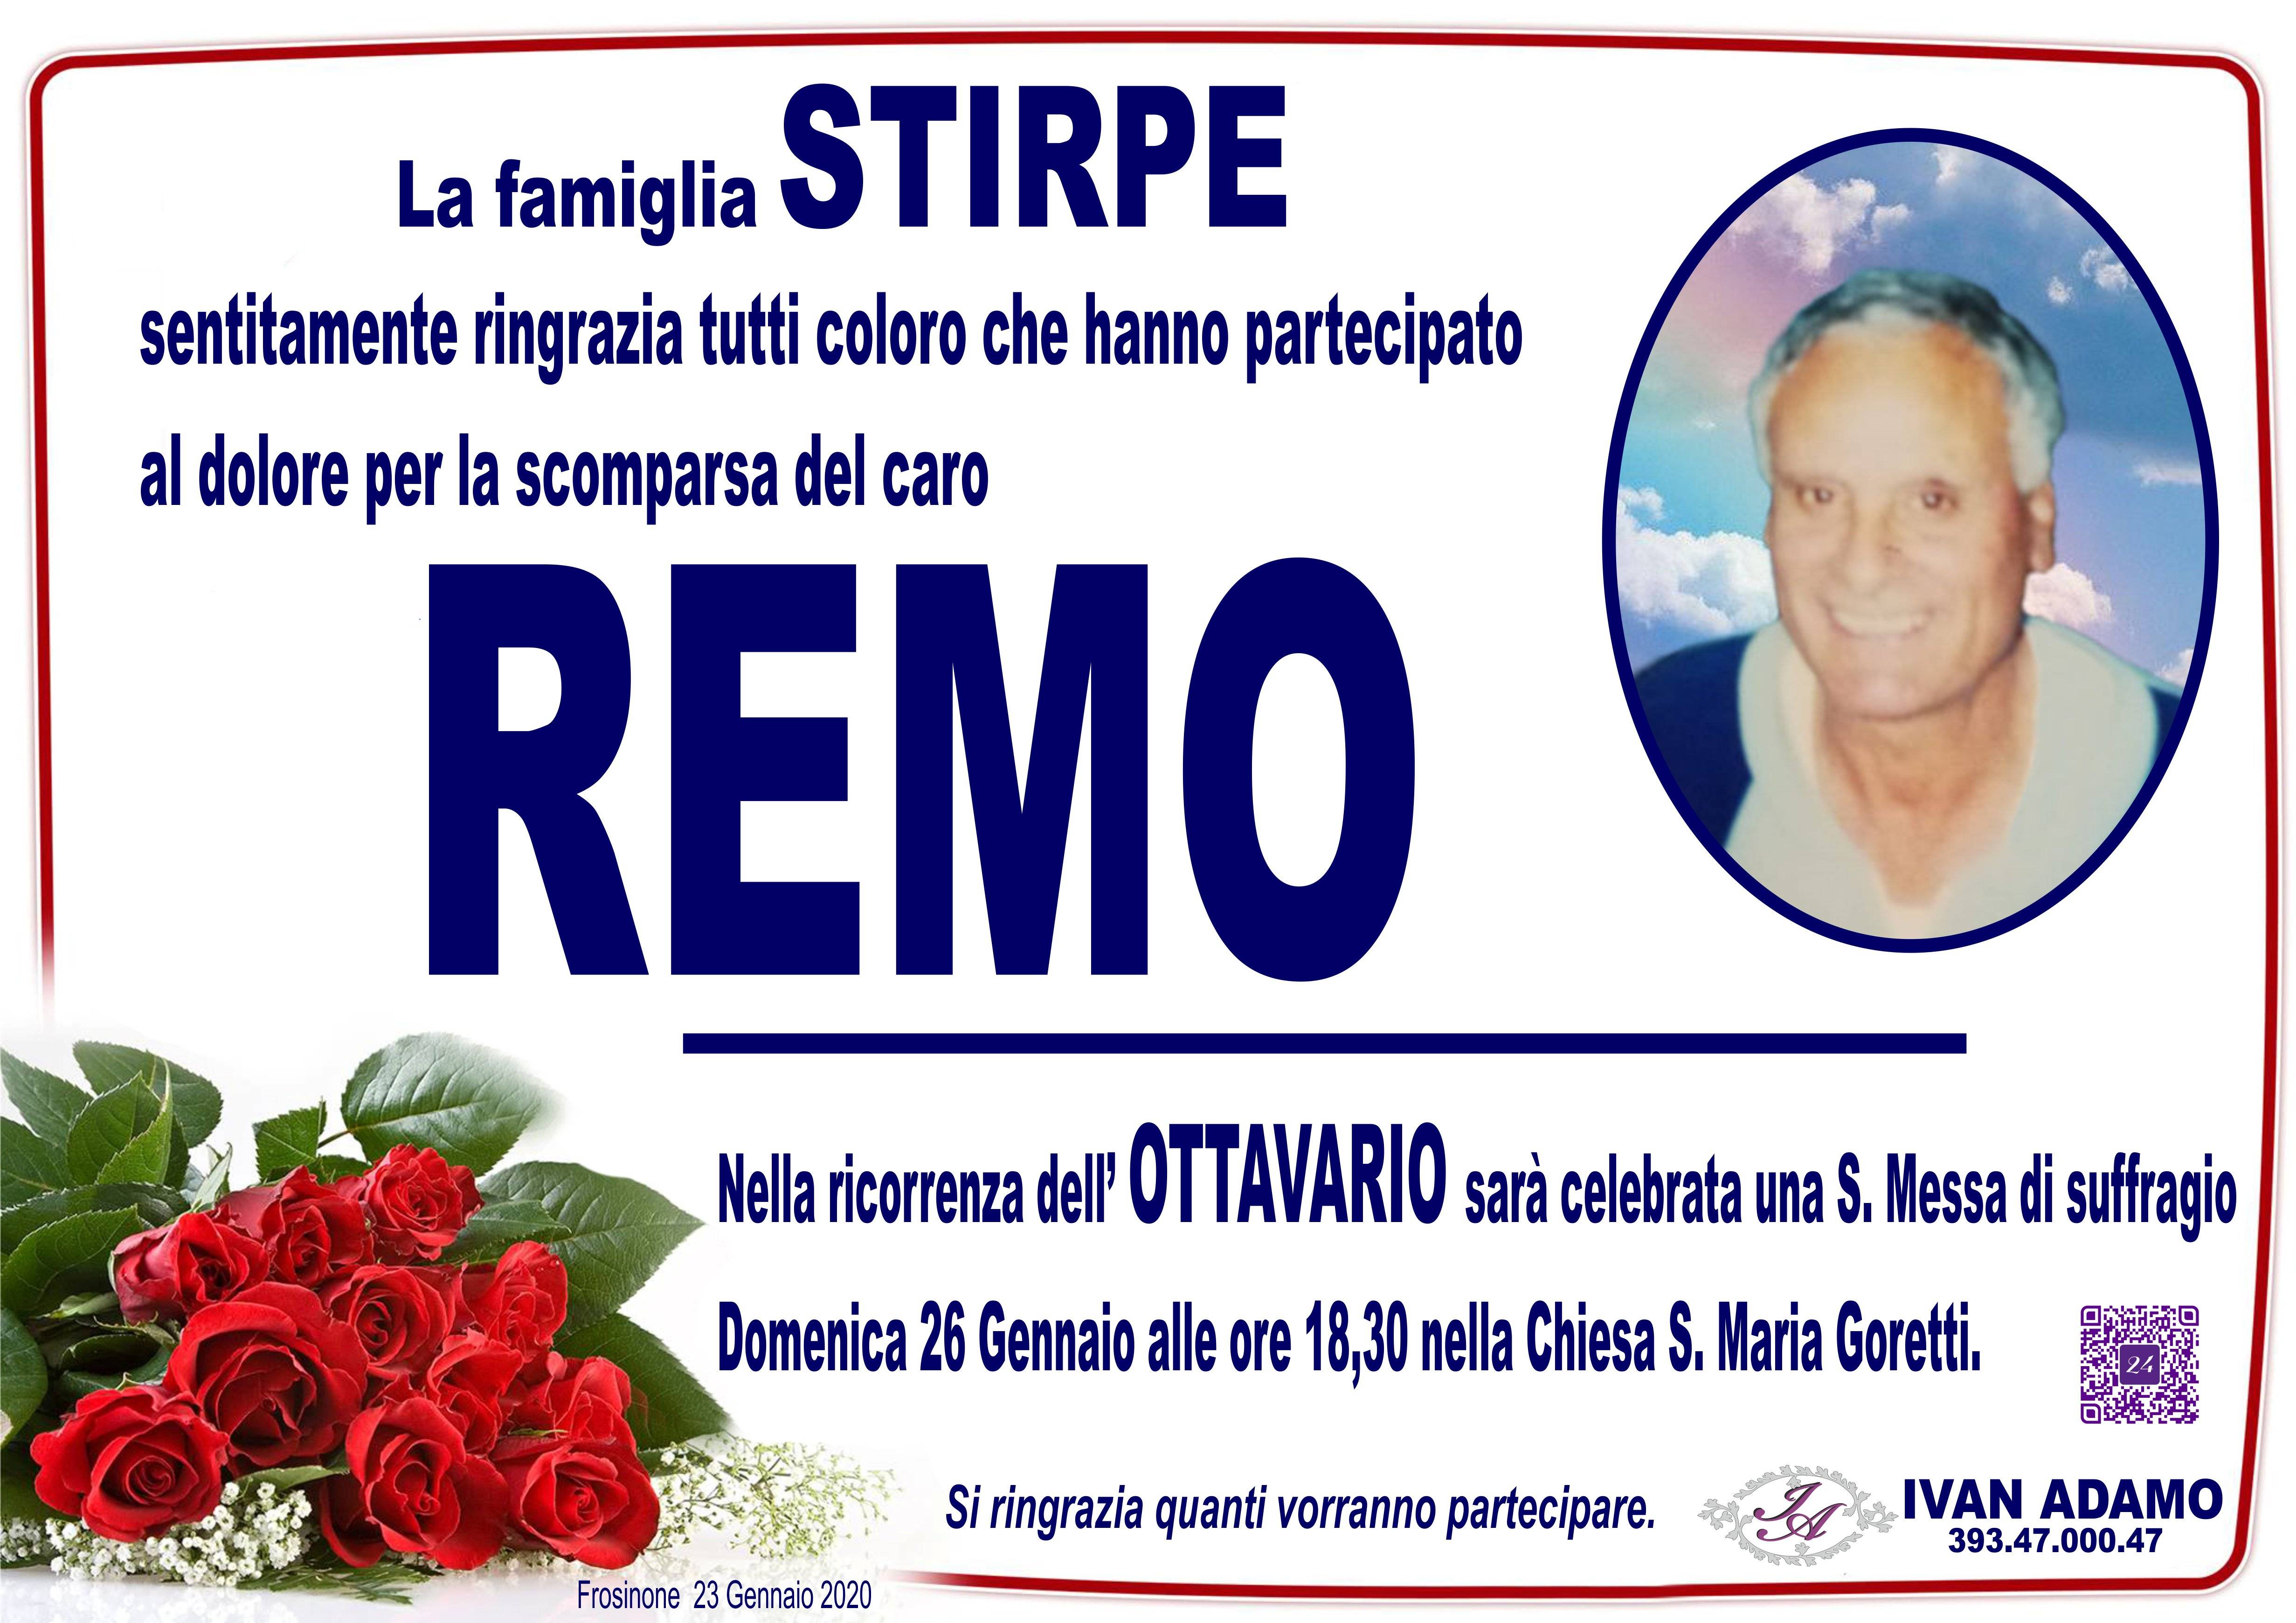 Remo Stirpe